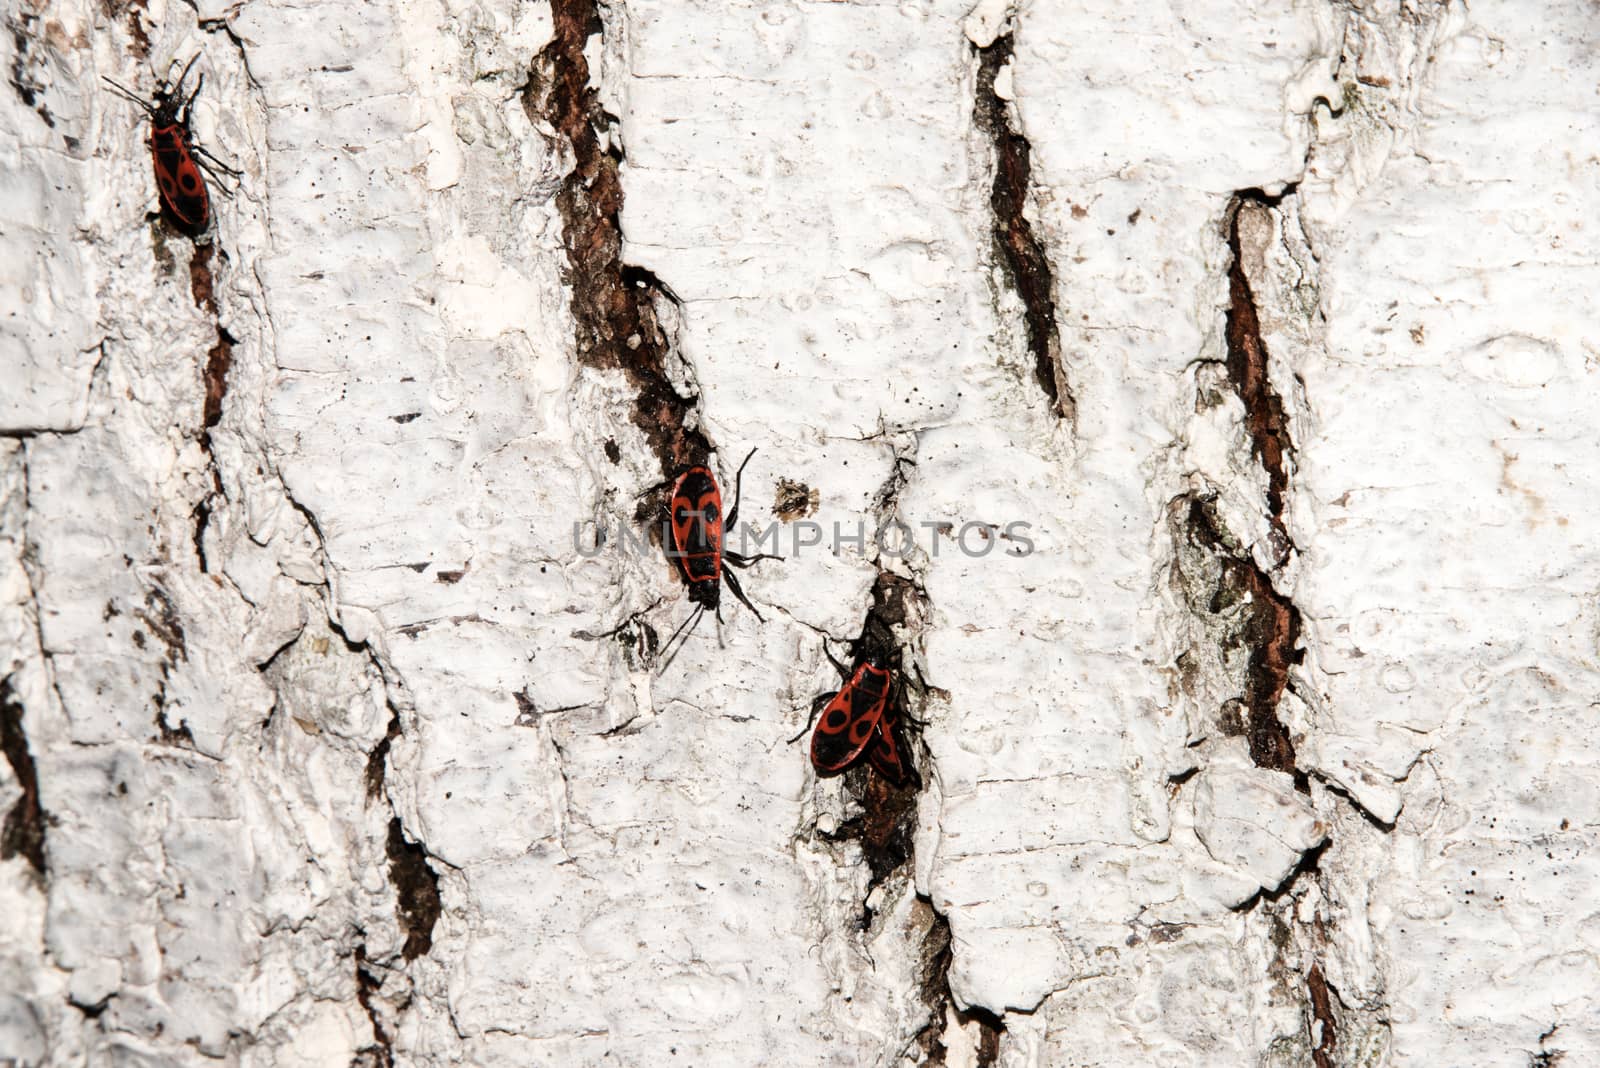 whitewashed tree bark texture with Cardinal beetle on multicolored bark. by elina_chernikova